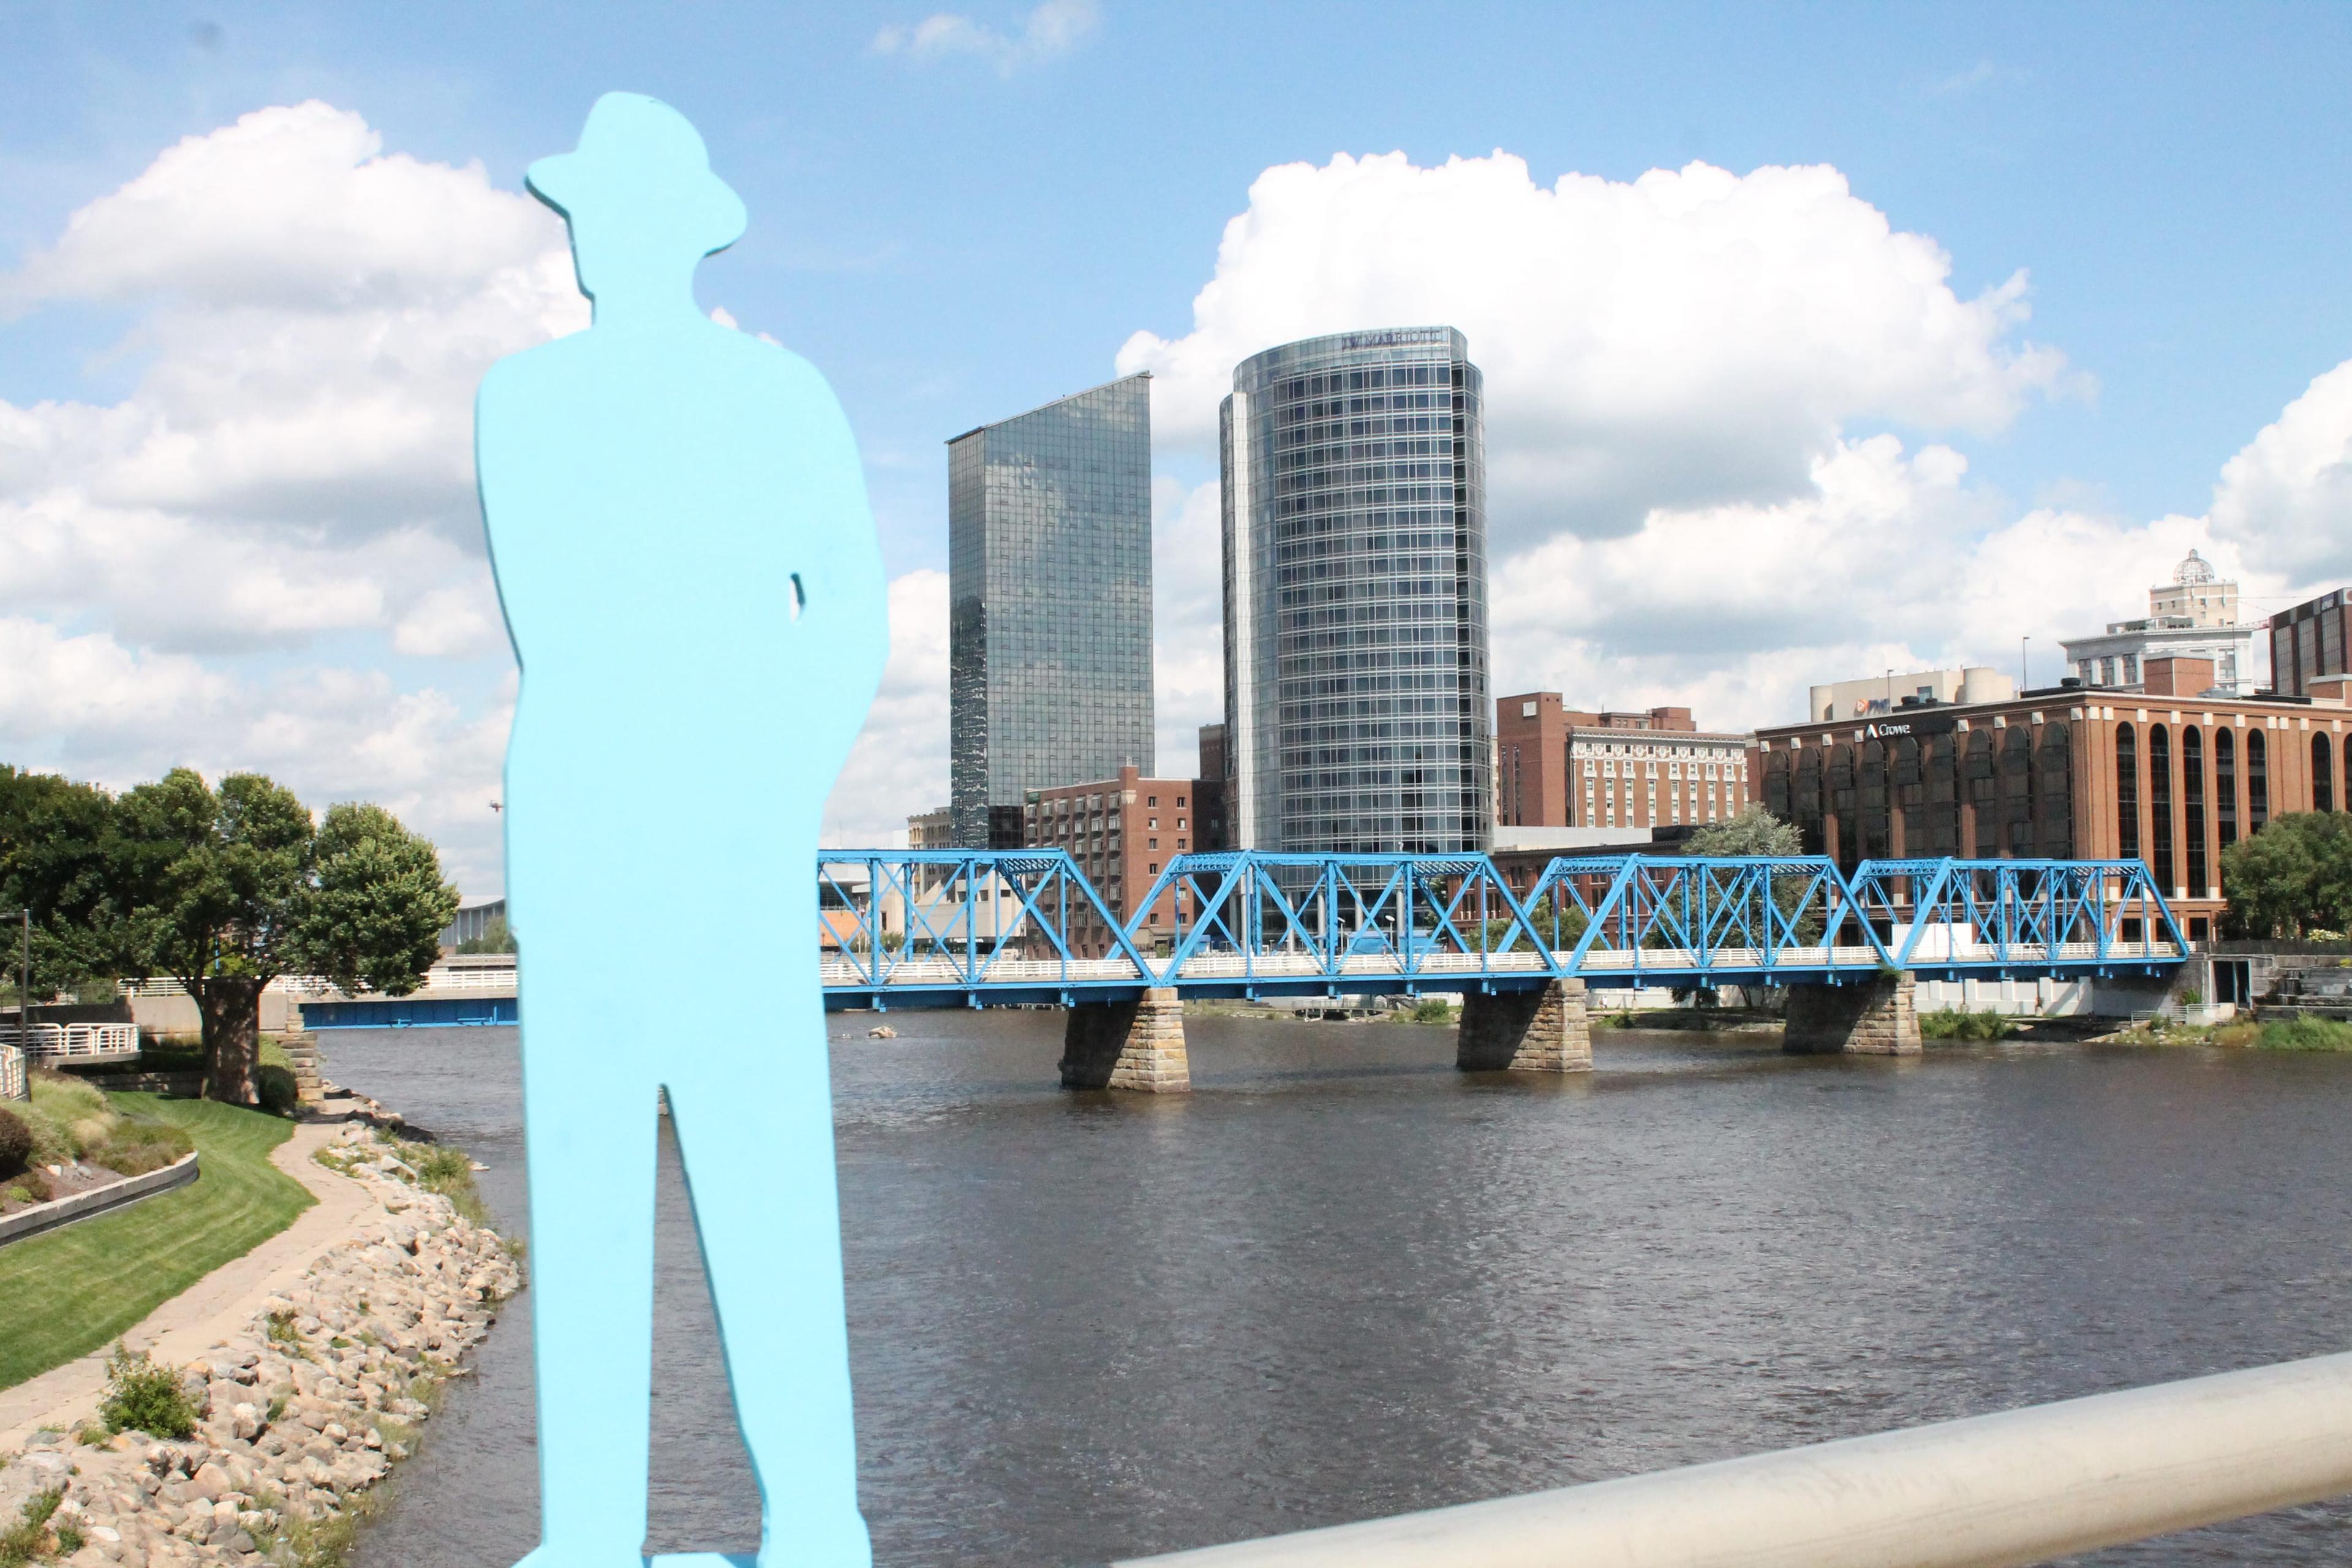 Image of one of the "blue men" near the Blue Bridge.